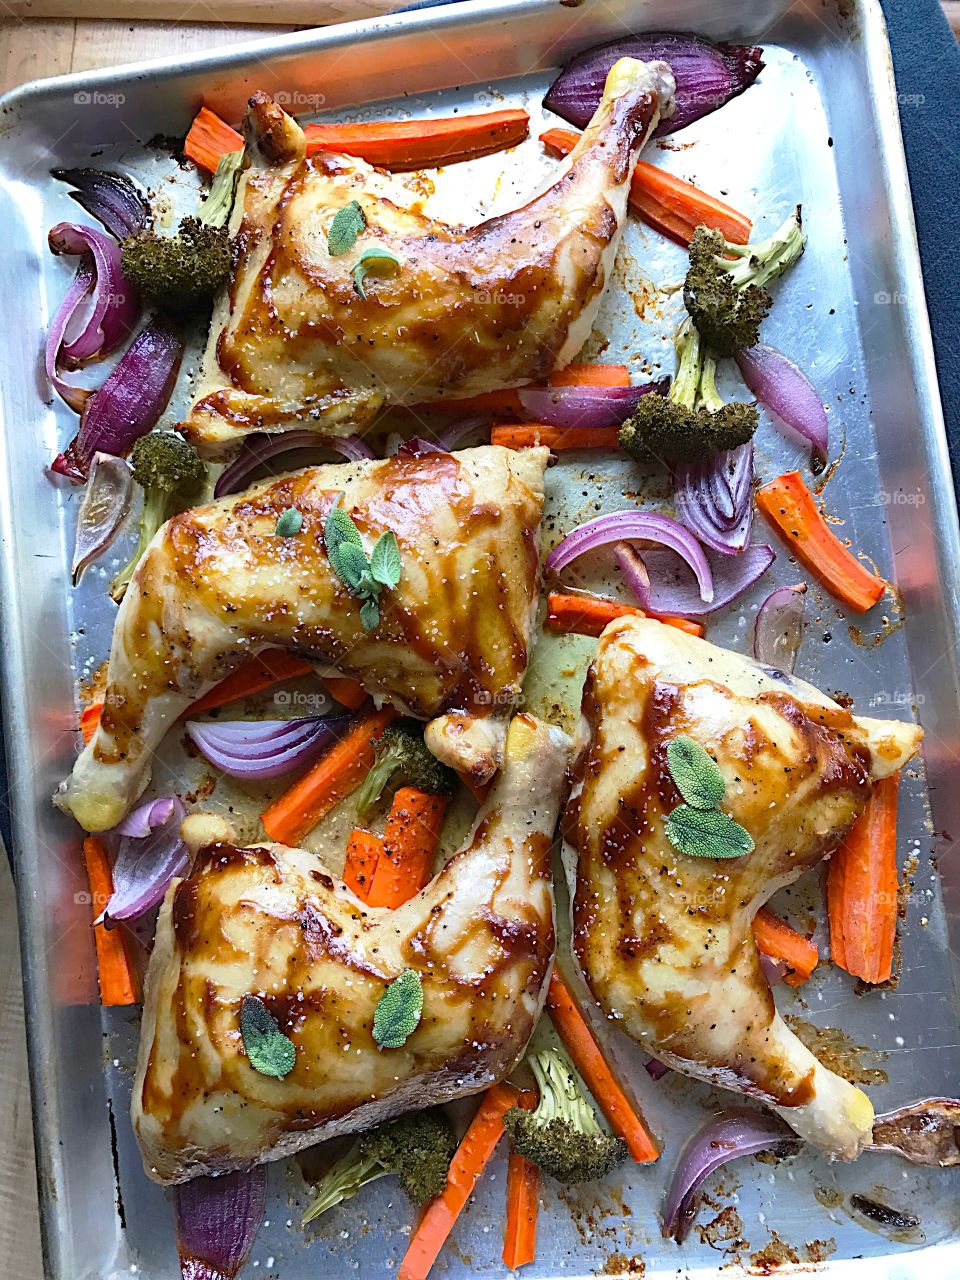 Chicken meal in a baking sheet